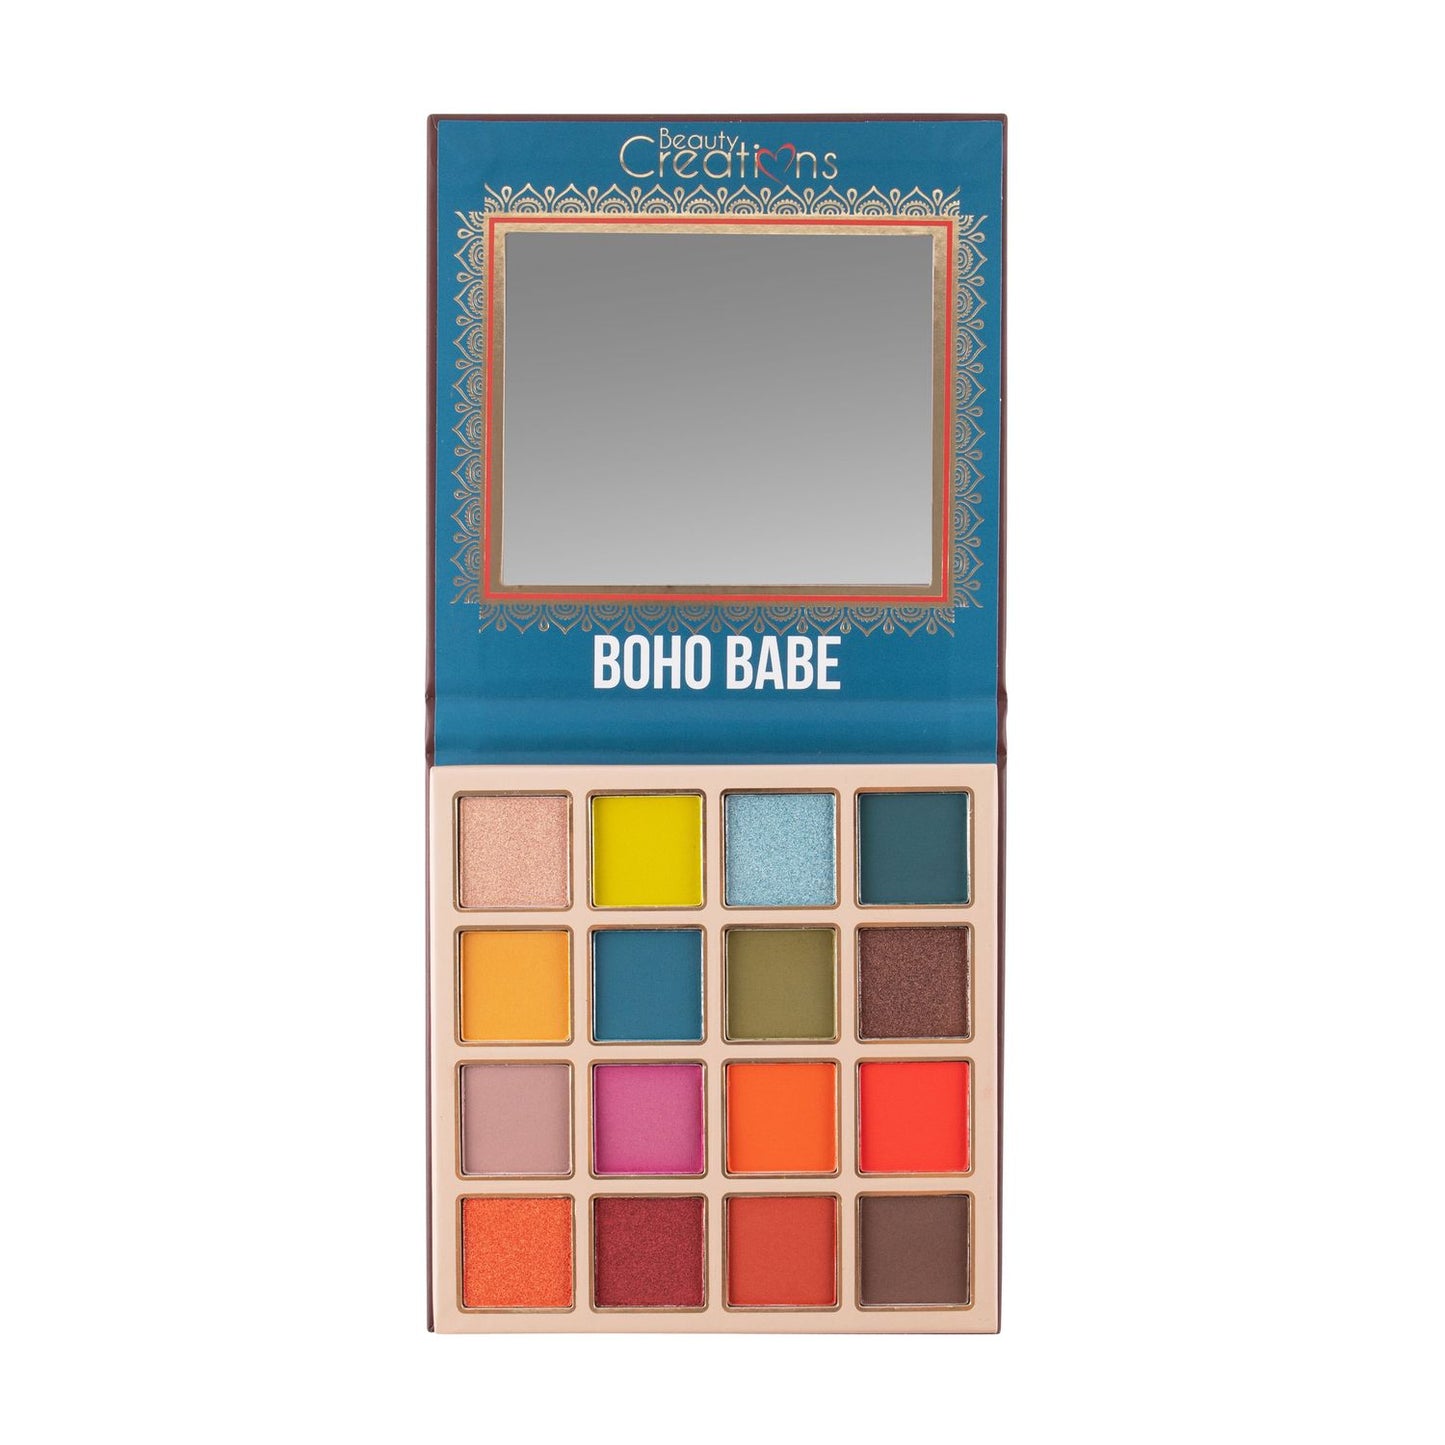 Boho Babe Beauty Creations - 16 Eyeshadow Palette